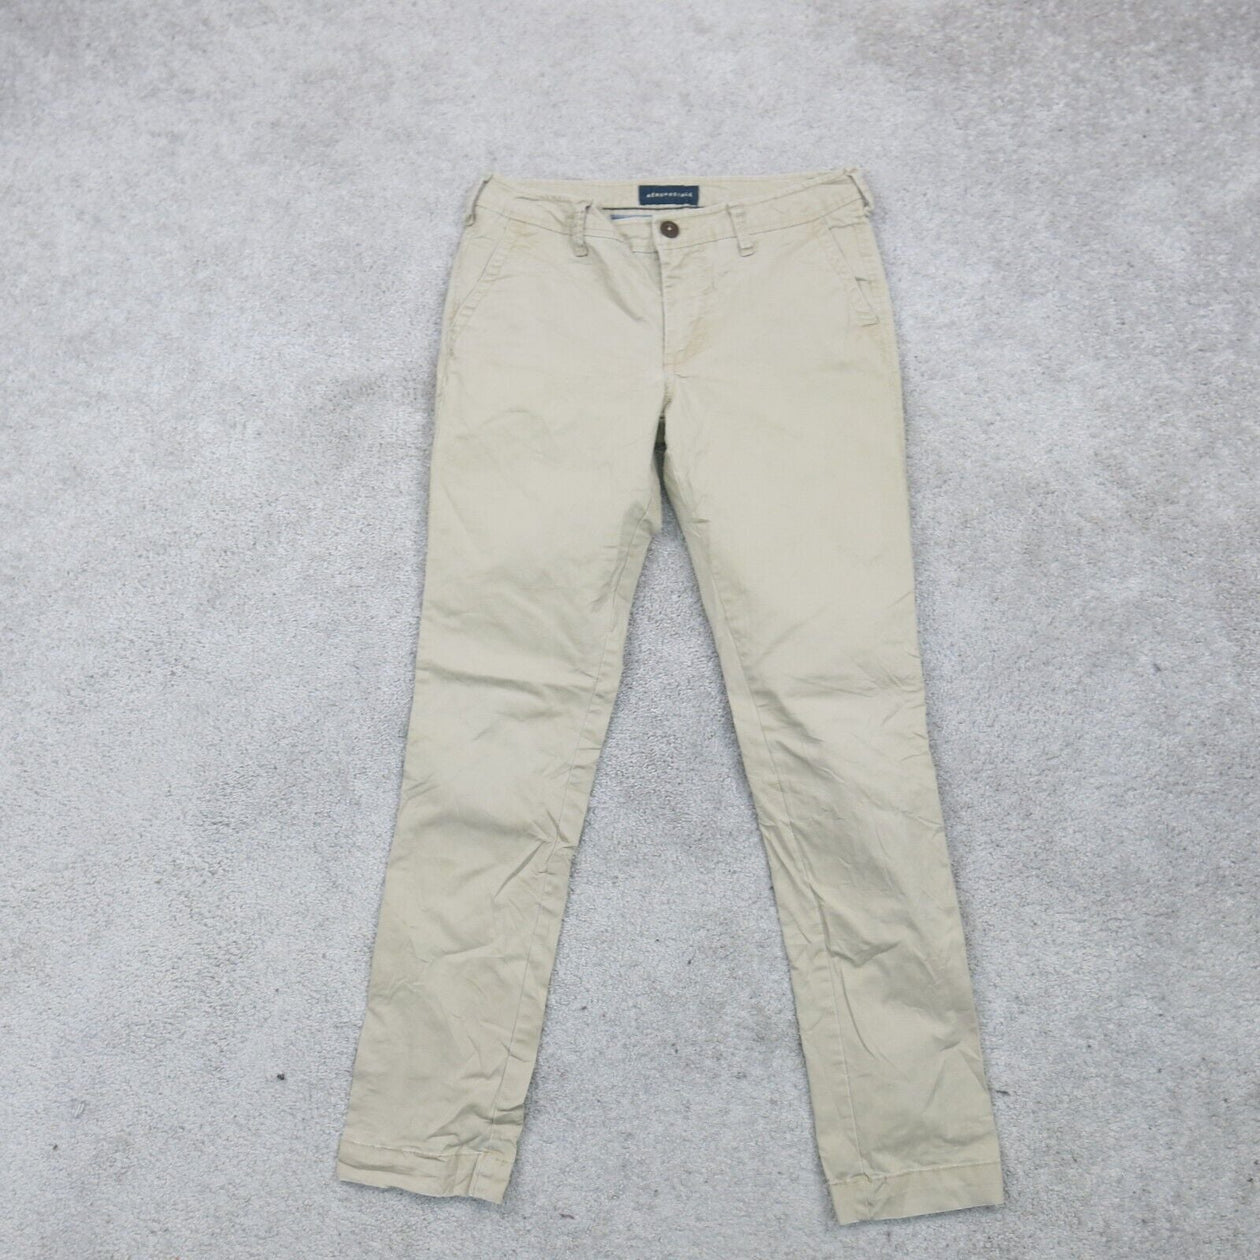 Michael Kors Men's 100% Cotton Flat Front Straight Fit Chino Pants